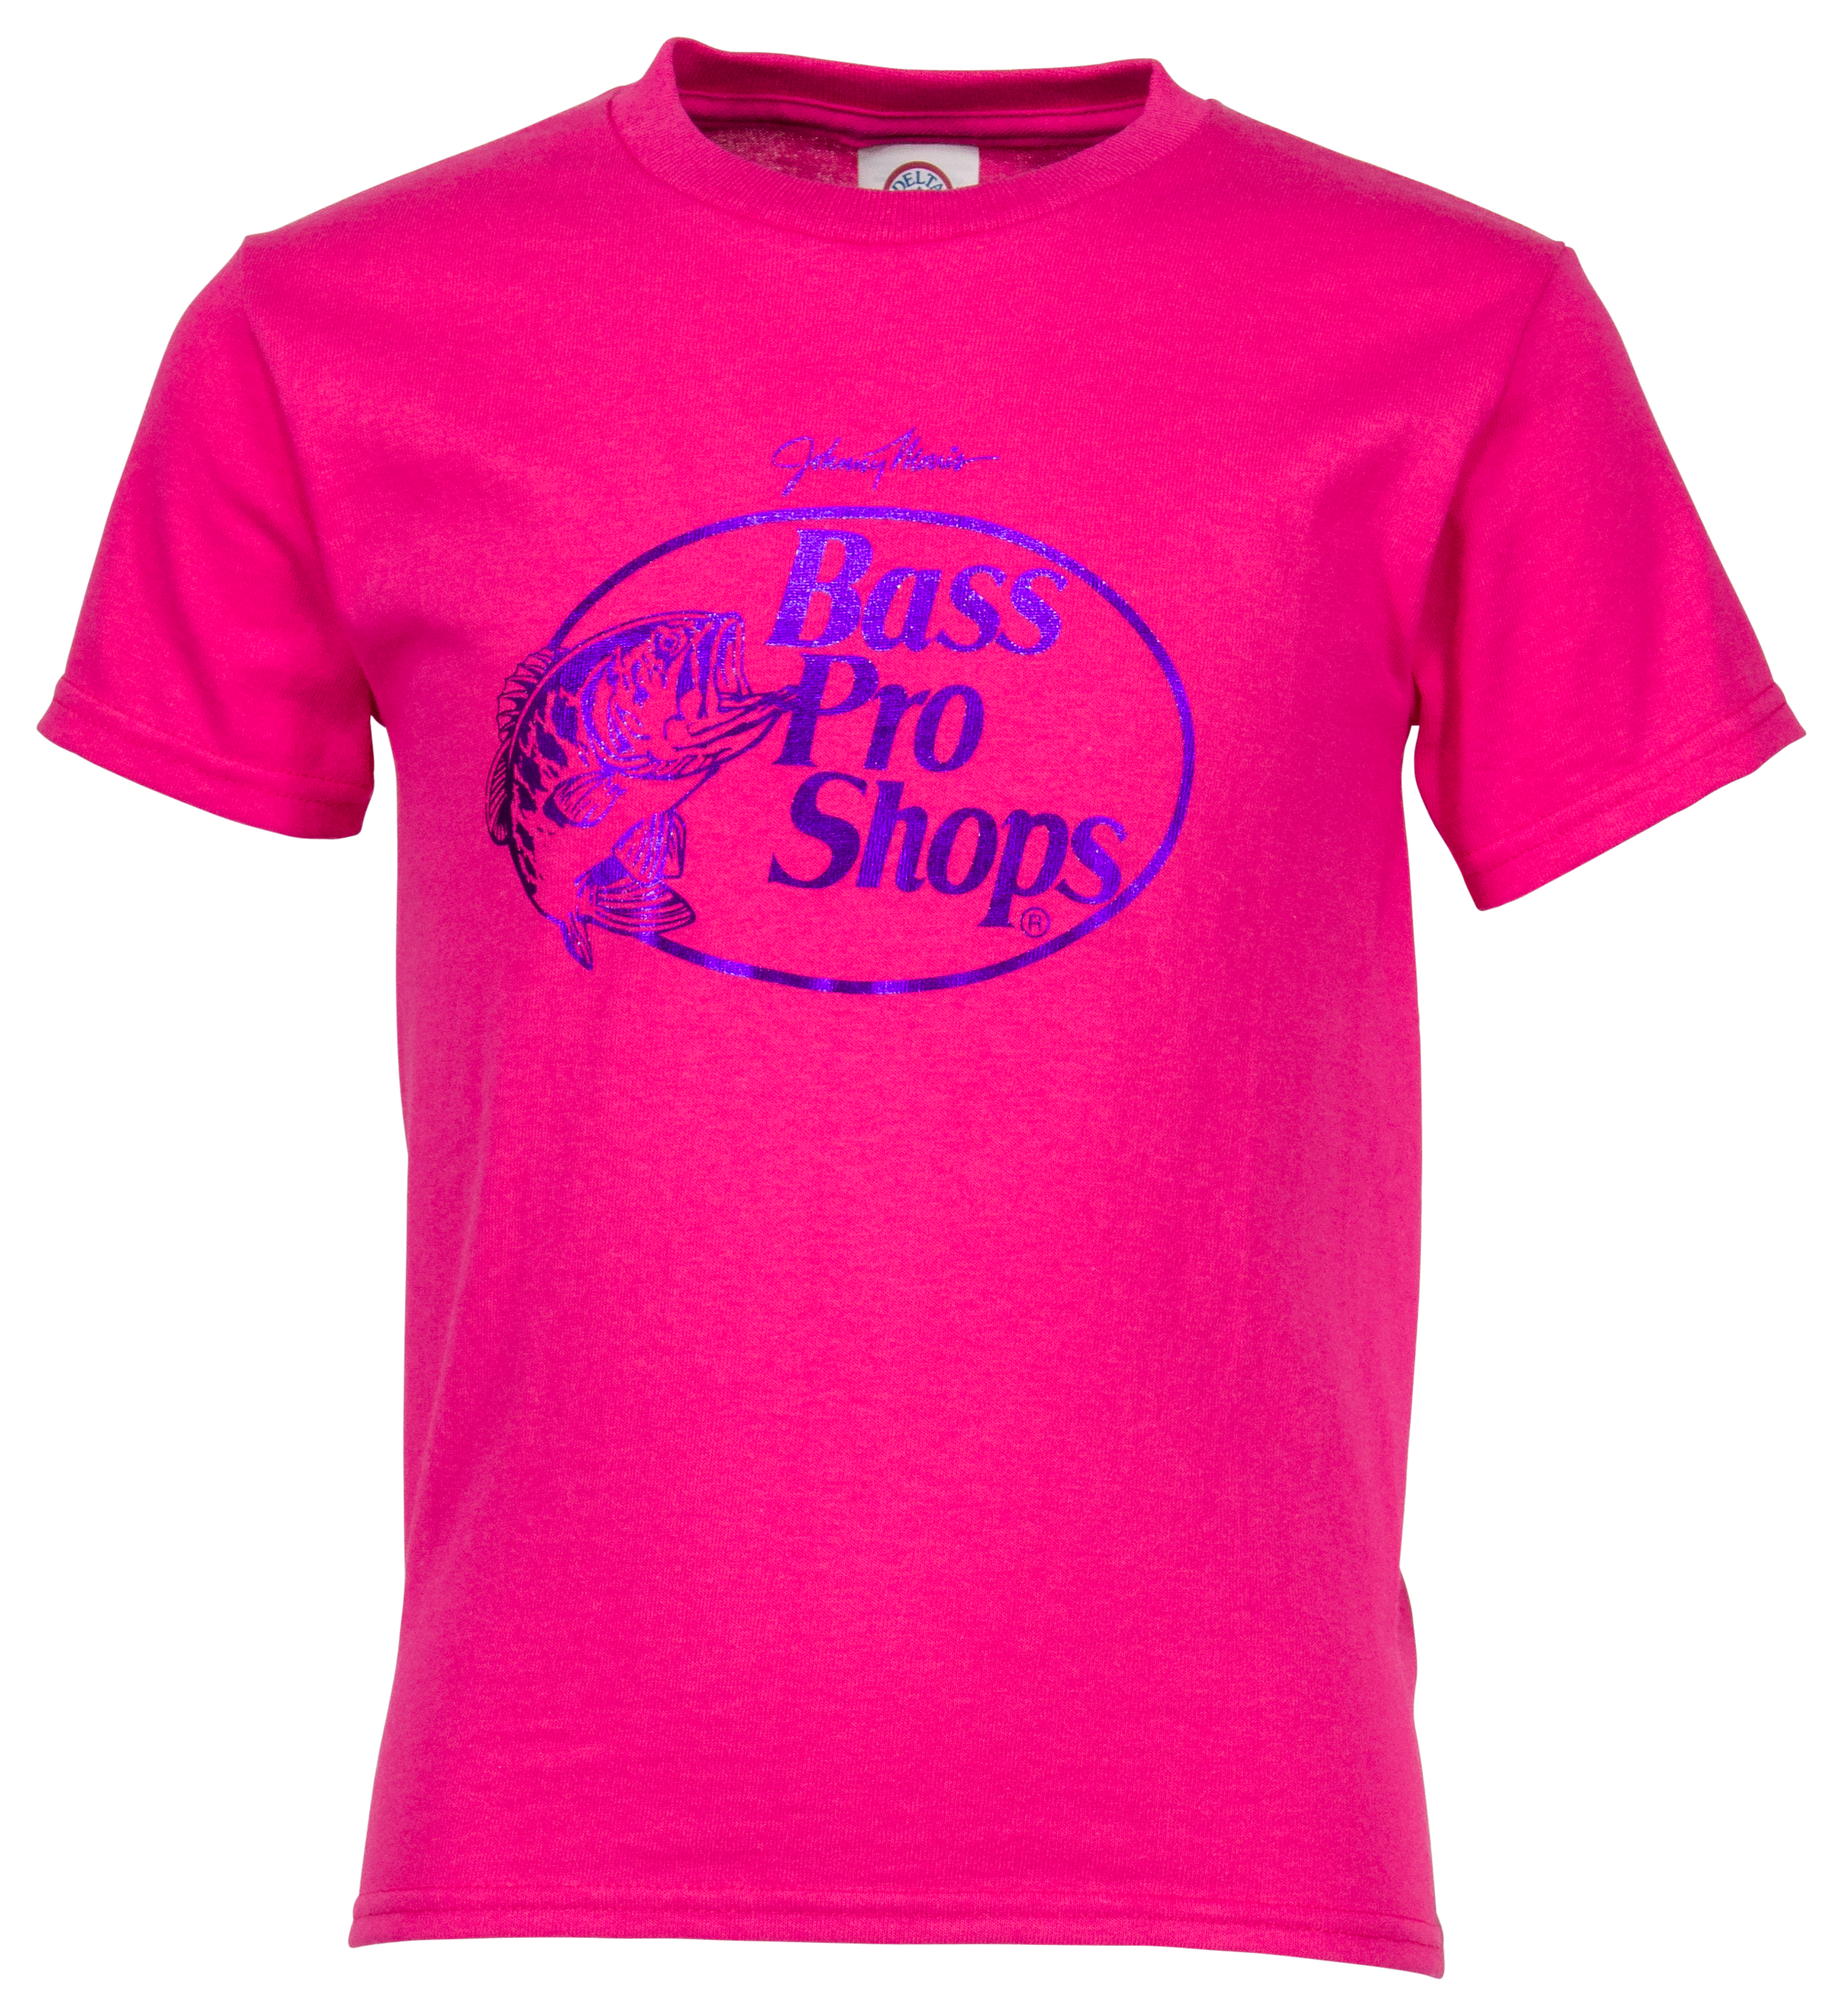 Bass Pro Shops Foil Logo Short-Sleeve T-Shirt for Toddlers or Kids